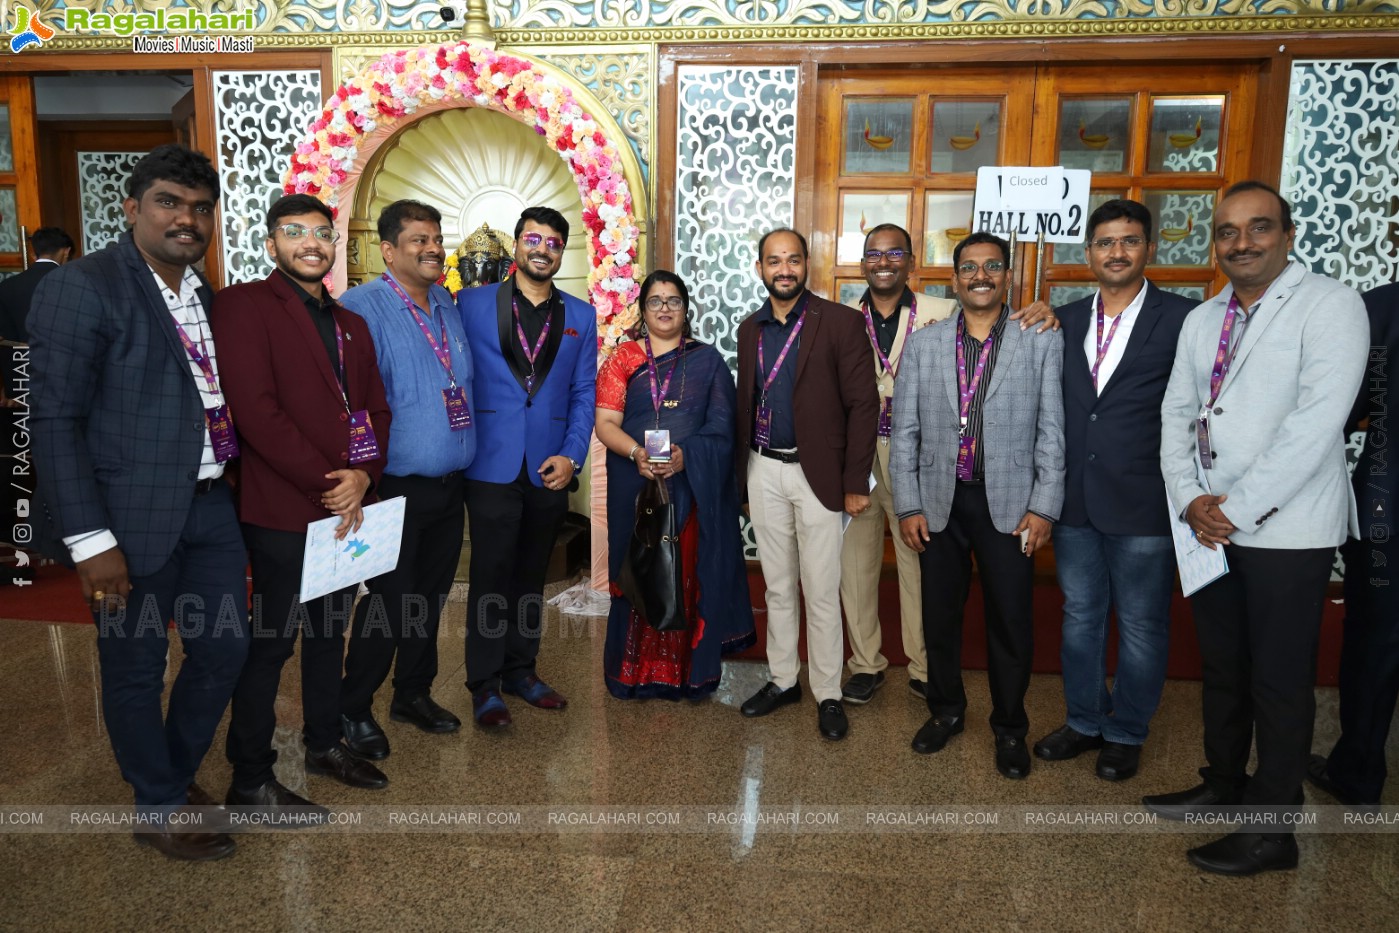 We Expo Event at Gadiraju Palace, Vizag